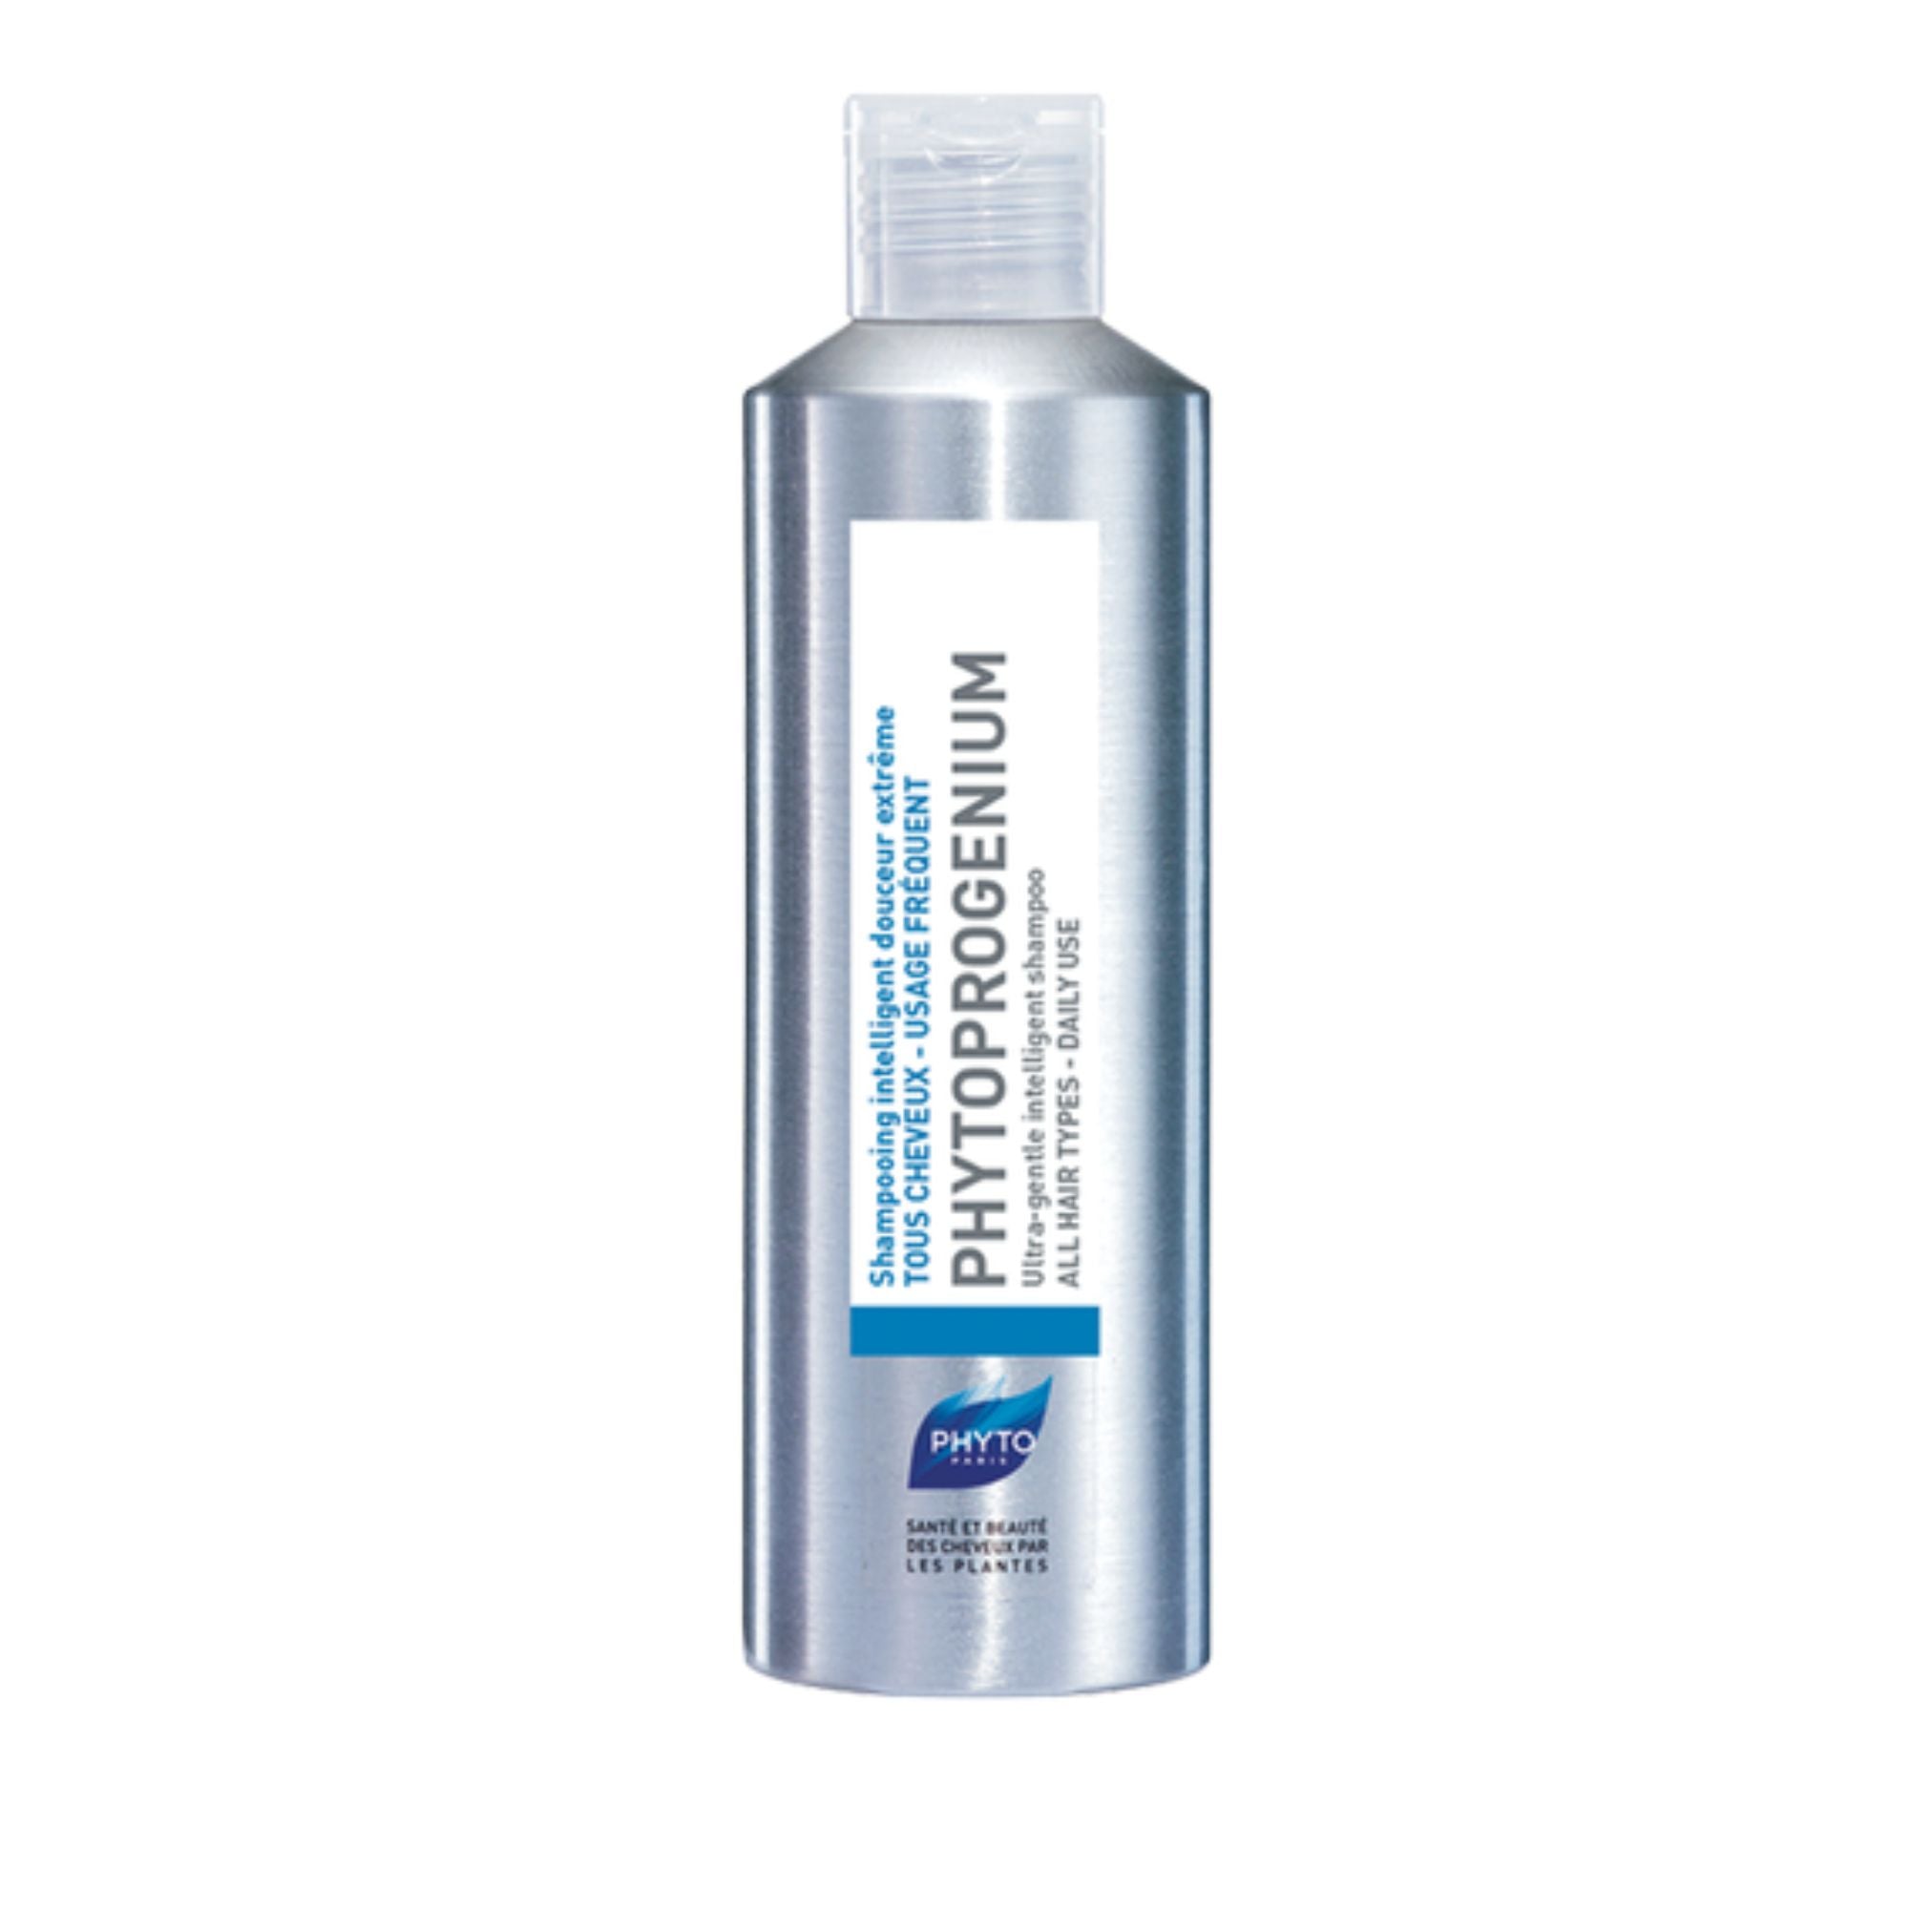 Phytoprogenium Ultra-Gentle Intelligent Shampoo 200ml